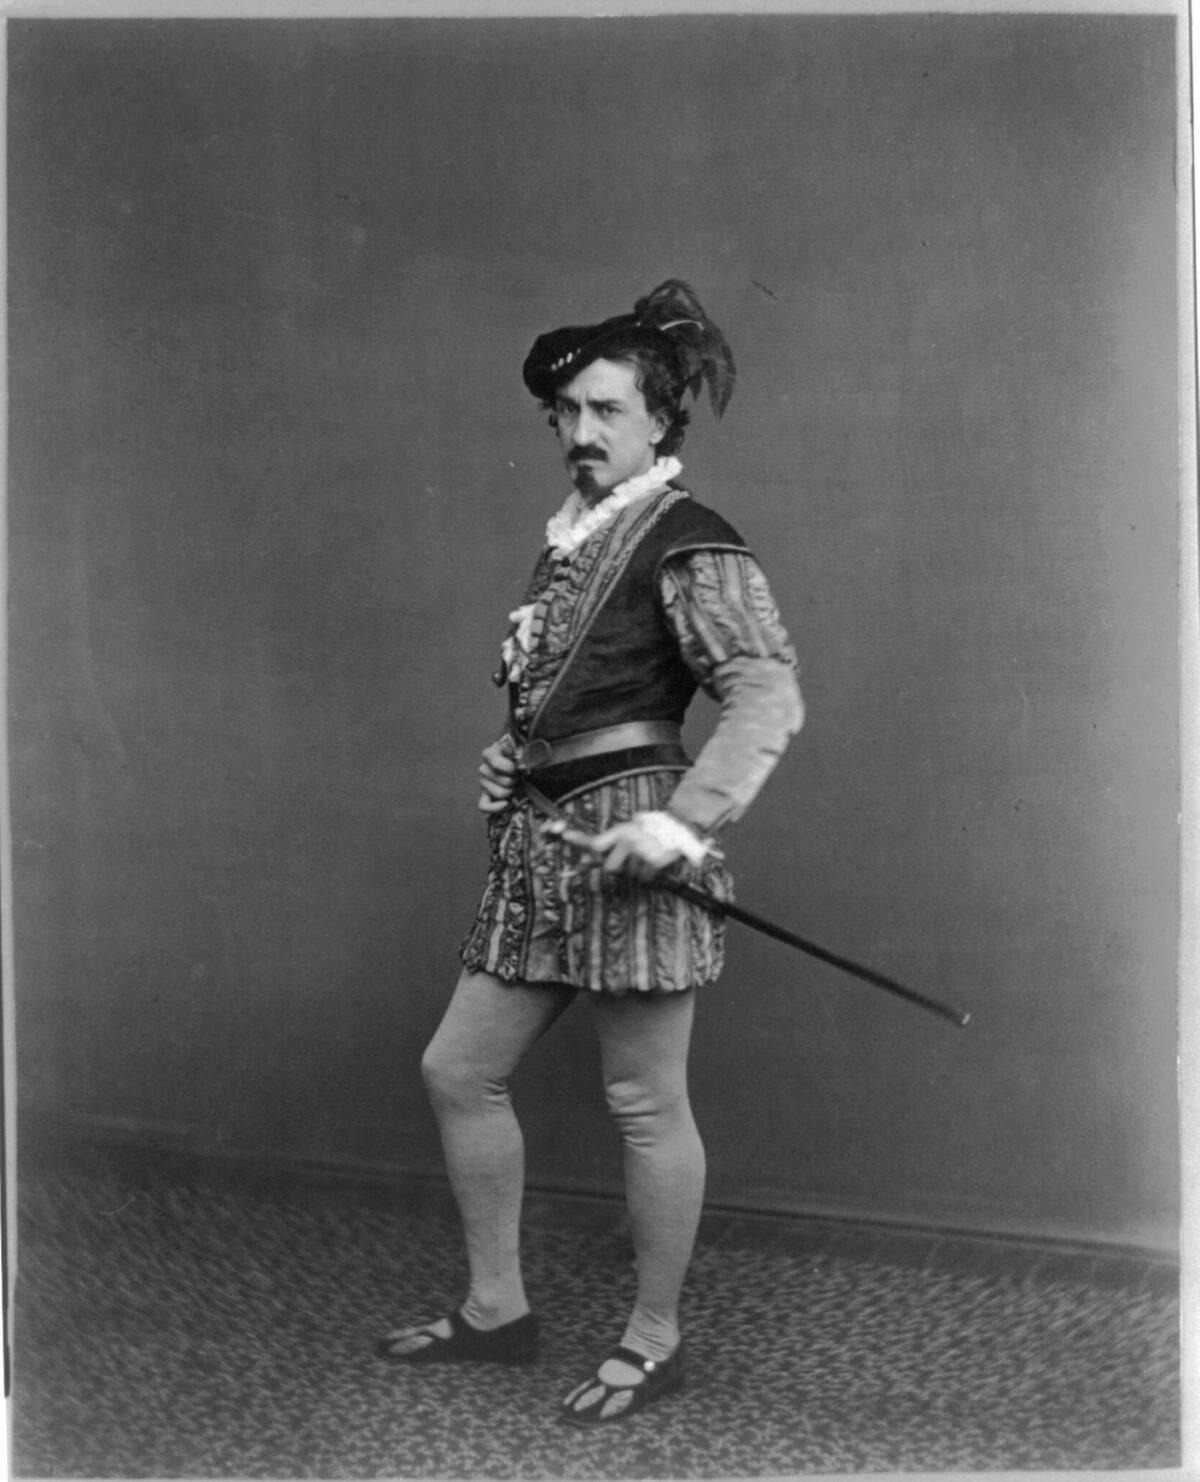 <br/>Photograph of the famous 19th-century American actor Edwin Booth as the villain Iago in Shakespeare's “Othello, the Moor of Venice,” circa 1870. Library of Congress. (Public Domain)